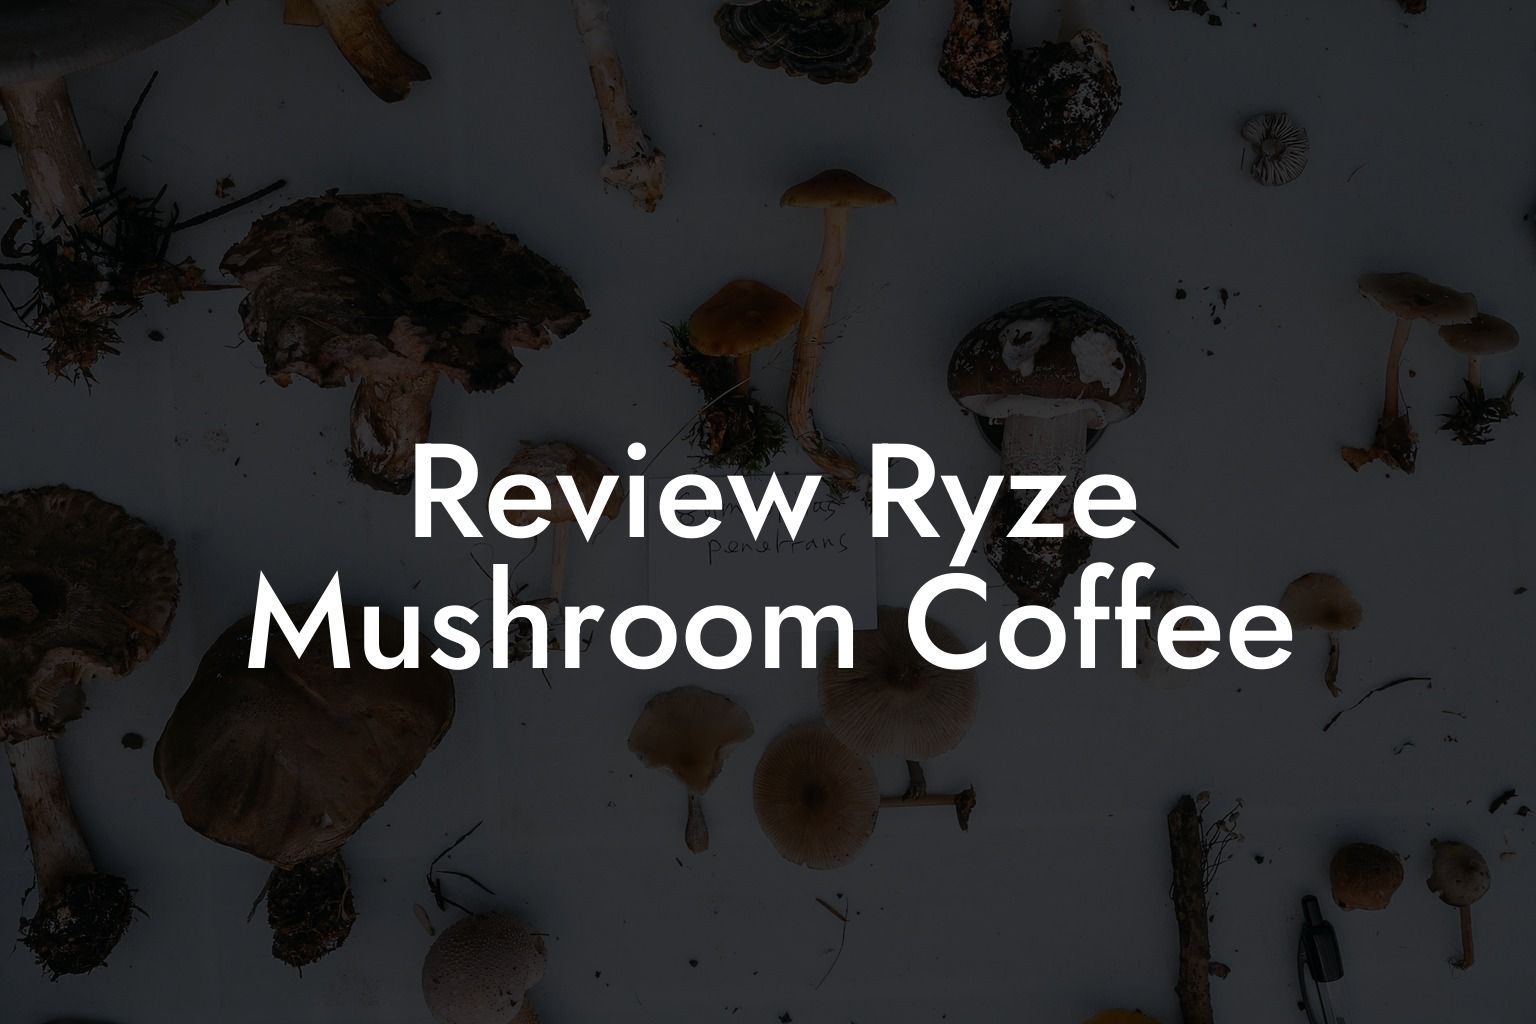 Review Ryze Mushroom Coffee